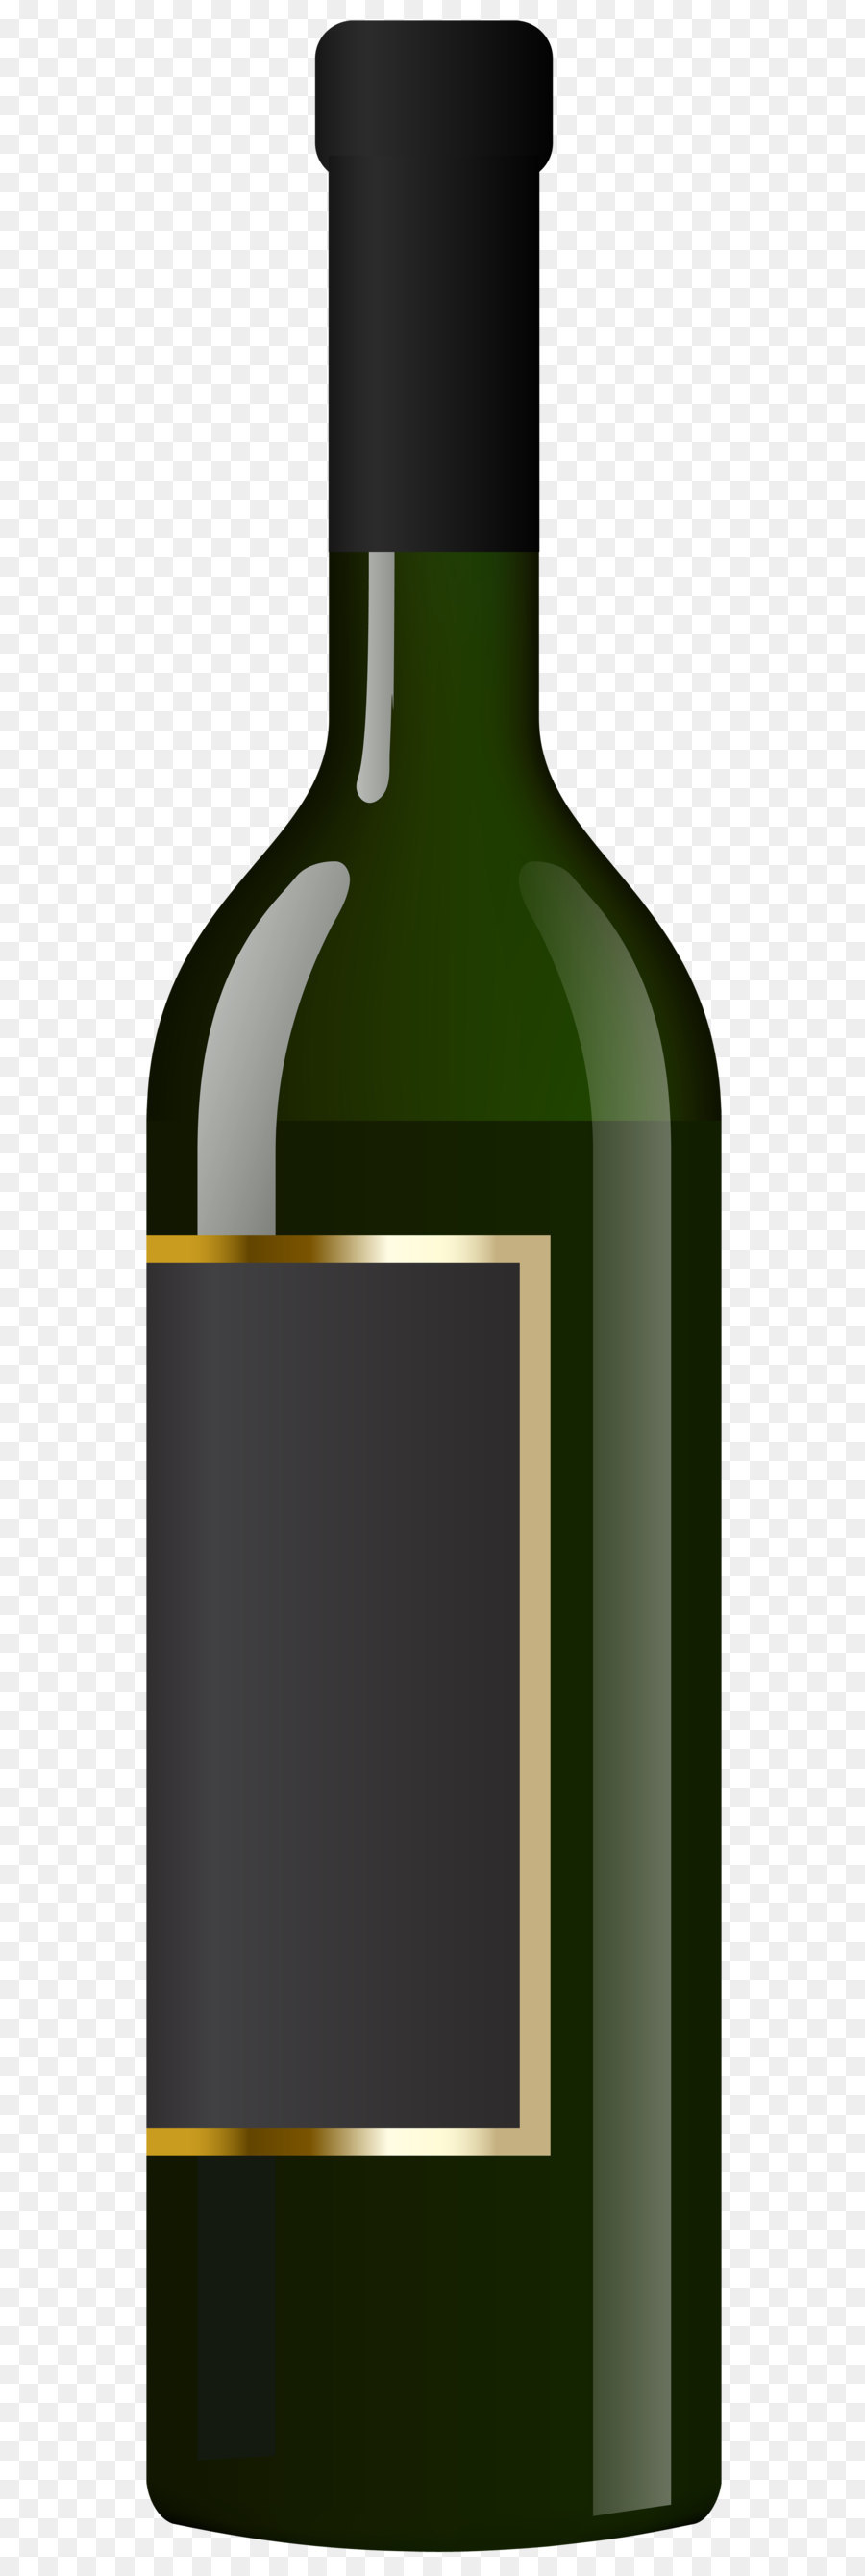 Red Wine White wine Bottle Clip art - Wine Bottle Transparent PNG Clip Art Image png download - 1950*8000 - Free Transparent White Wine png Download.